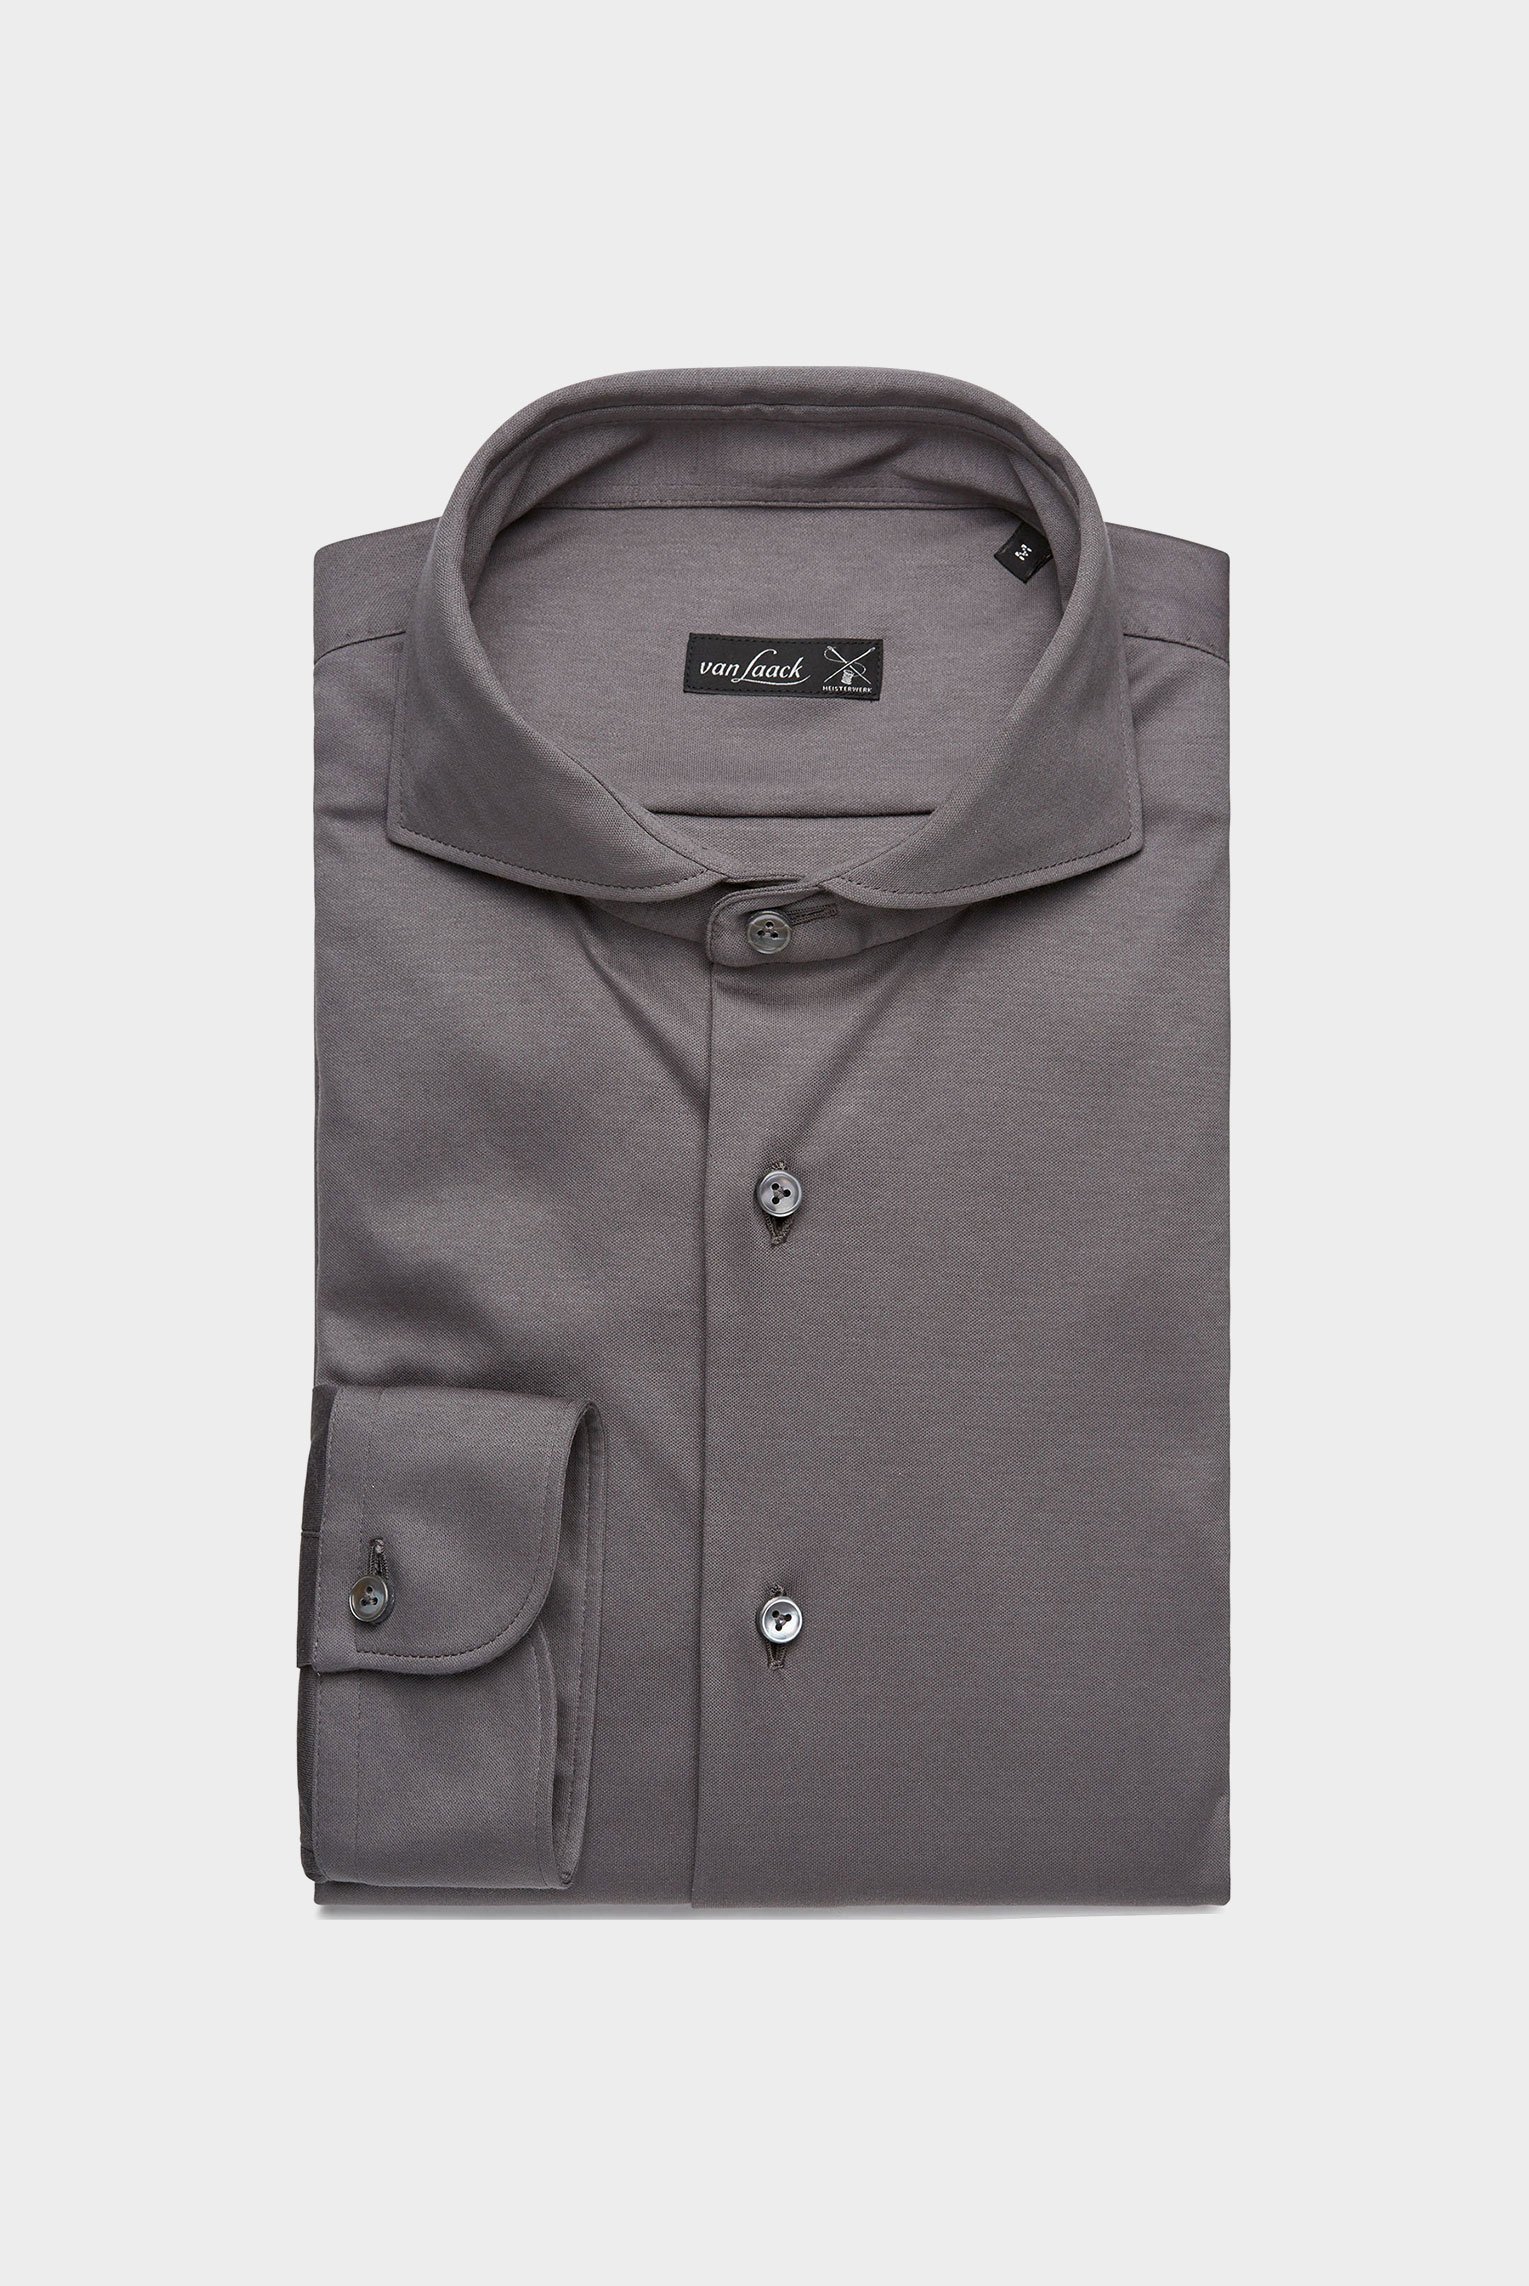 Casual Hemden+Jersey Hemd aus Schweizer Baumwolle Tailor Fit+20.1683.UC.180031.070.XL